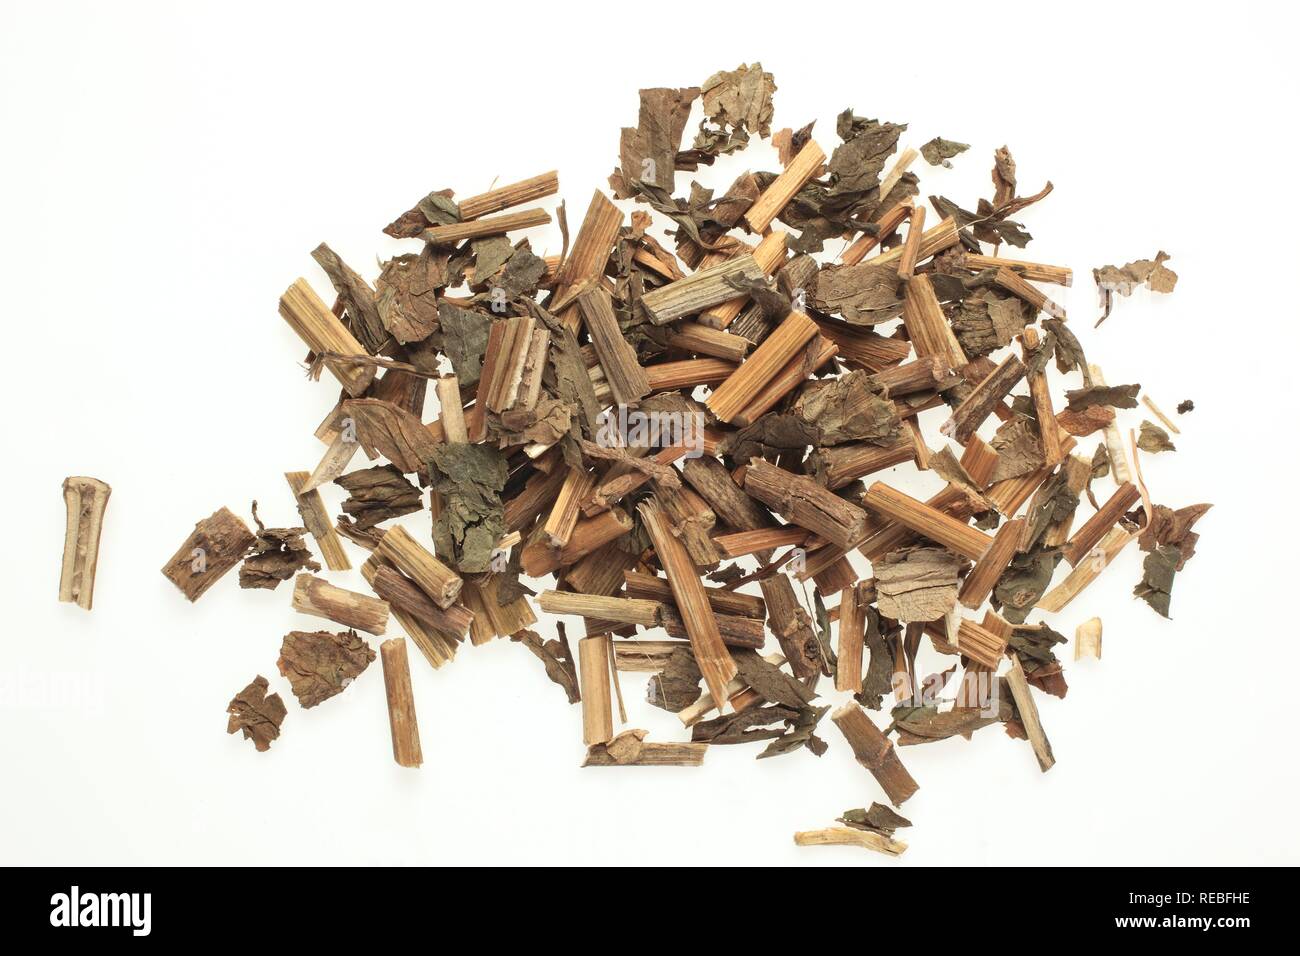 Dried herb of the medicinal plant Pei Lan (Eupatorium fortunei) Stock Photo